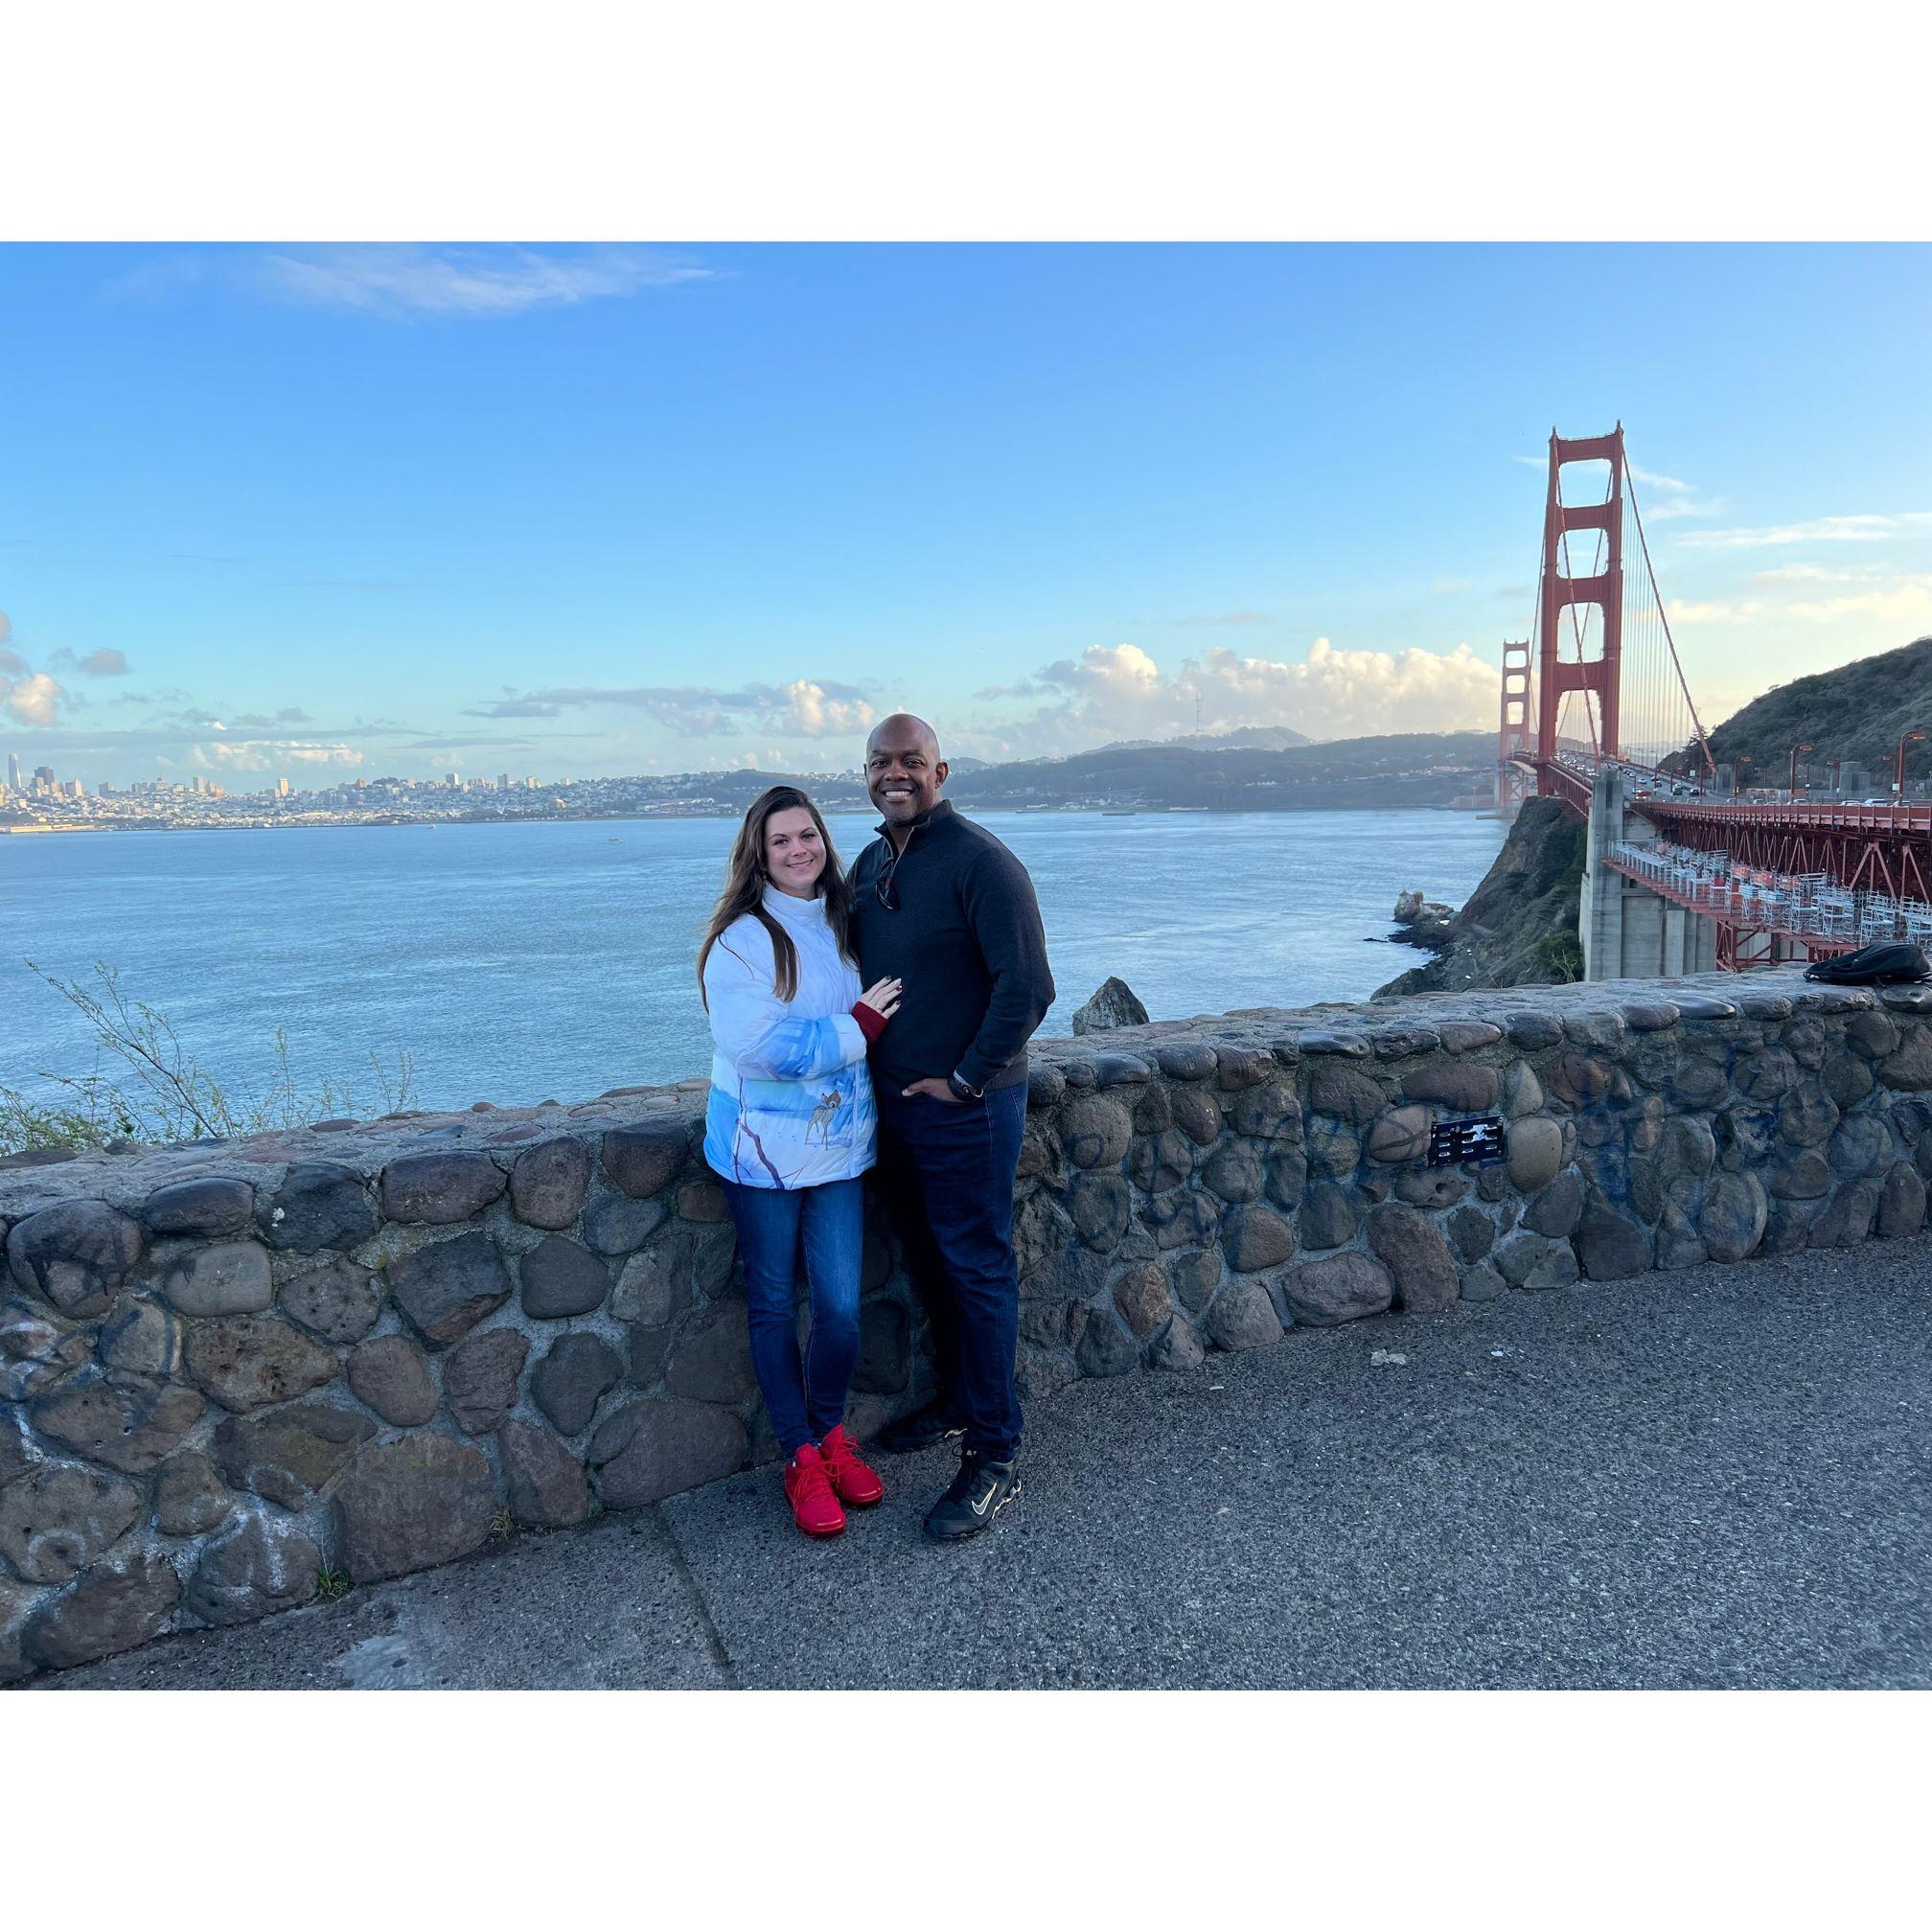 Enjoying the Golden Gate Bridge